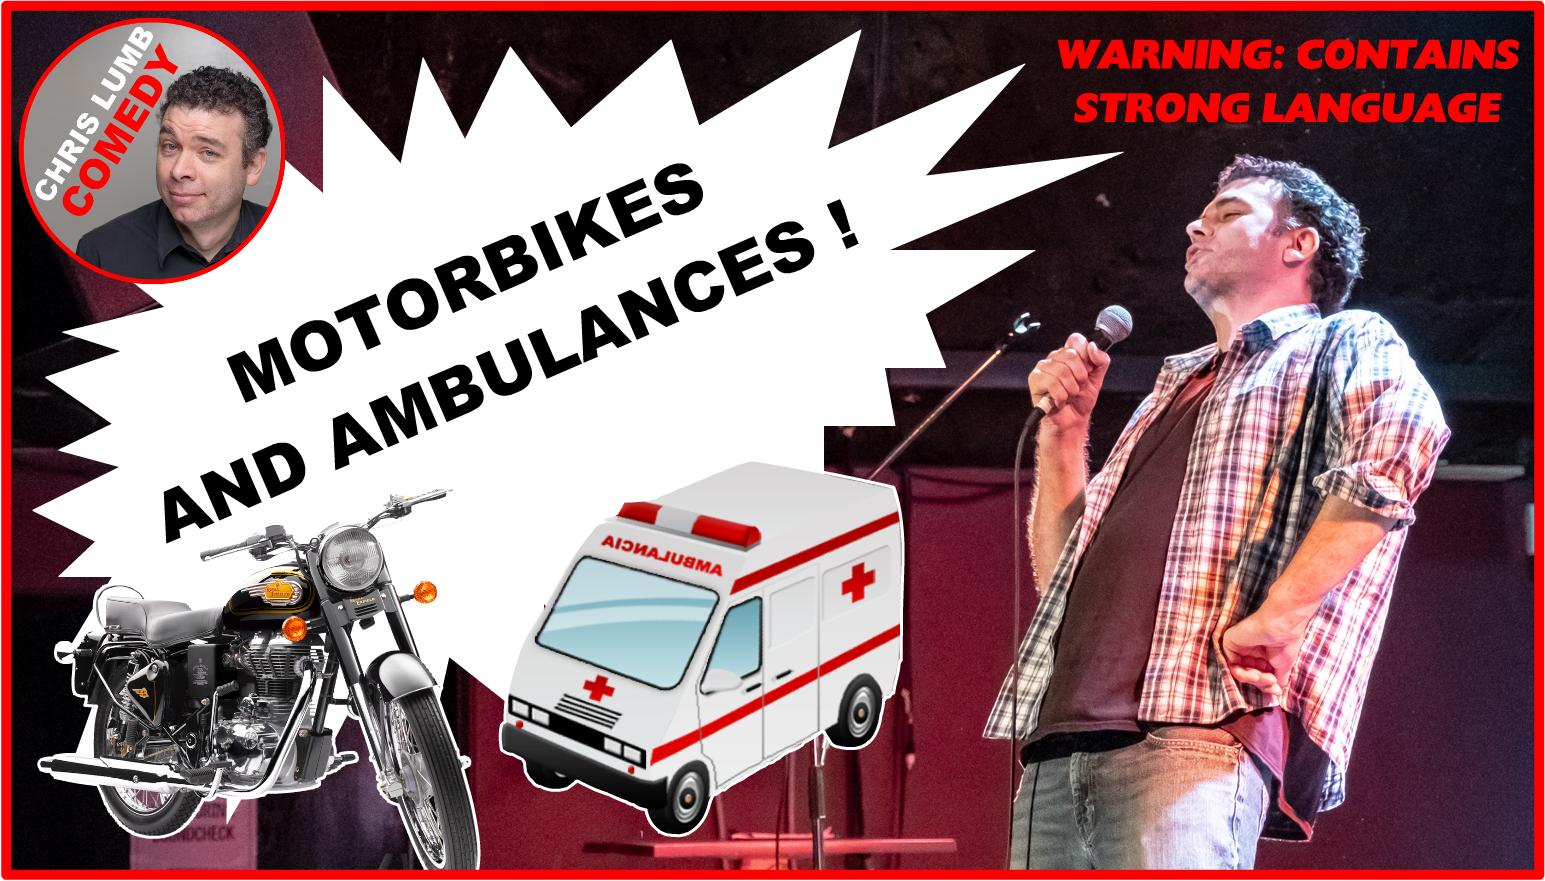 Chris Lumb Comedy "Motorbikes and Ambulances"